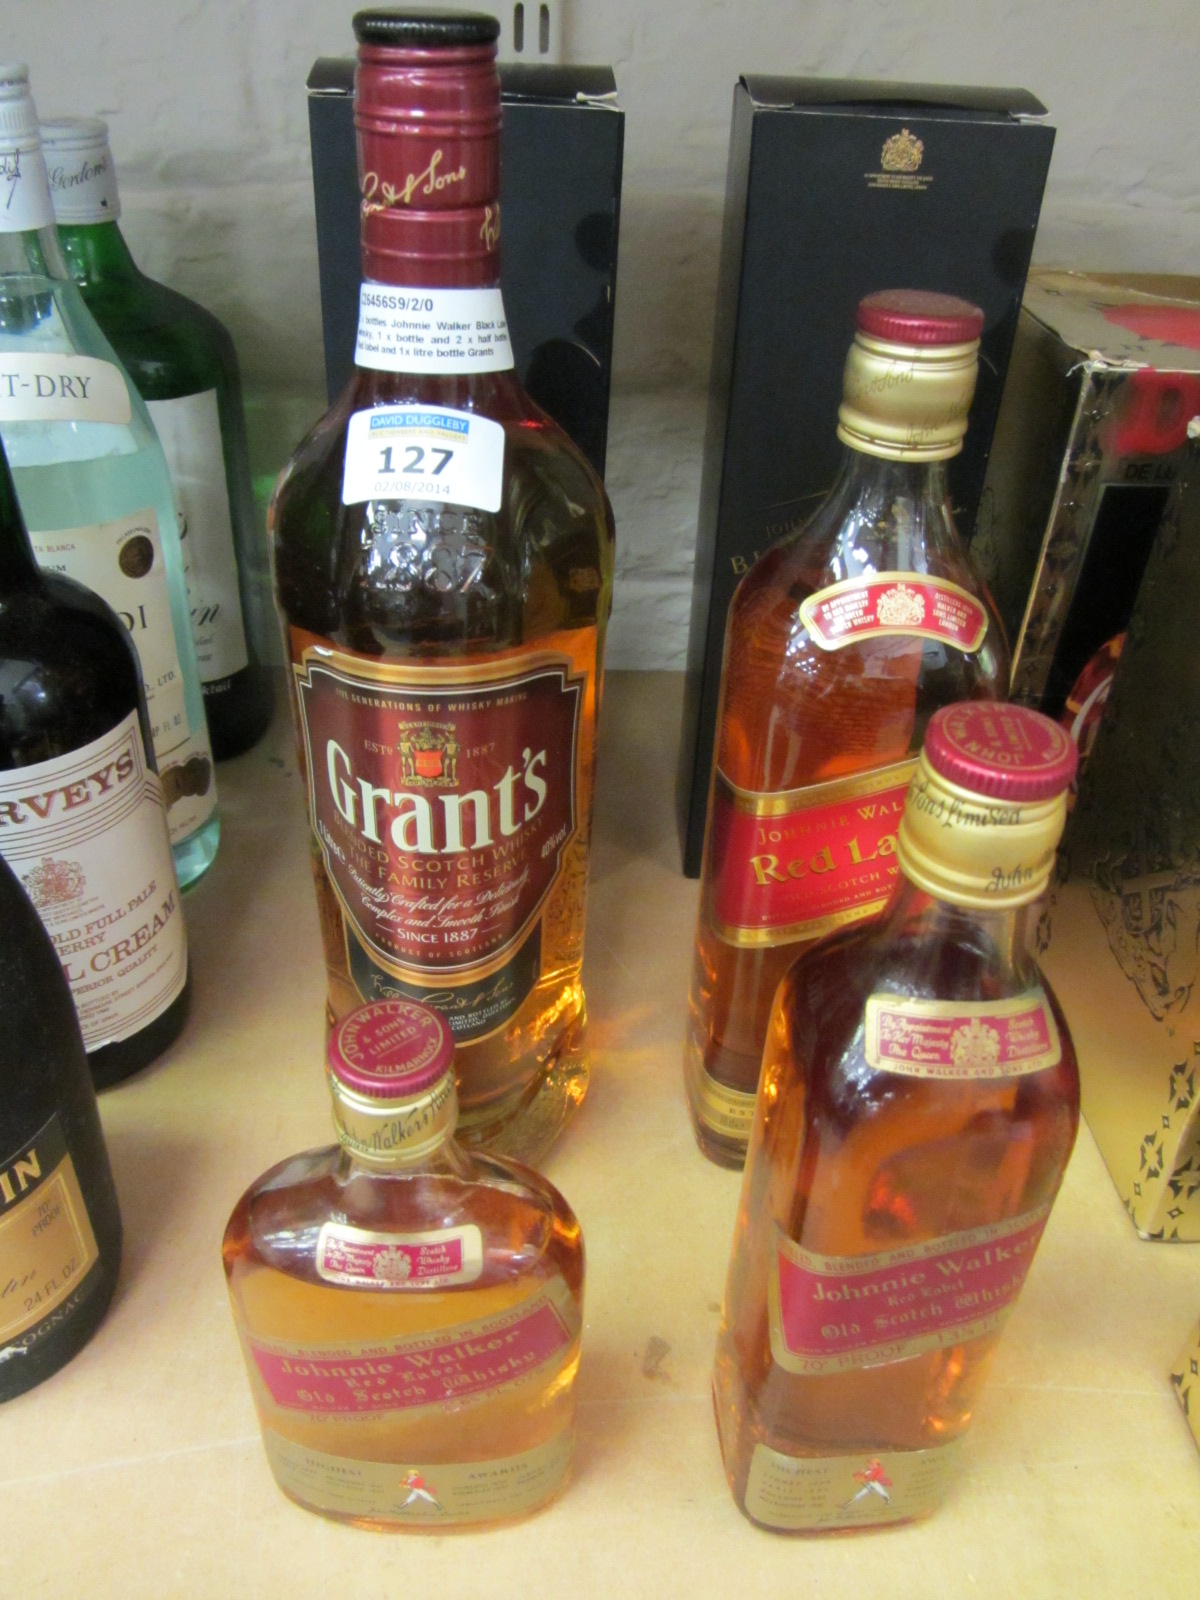 2 x bottles Johnnie Walker Black Label whisky, 1 x bottle and 2 x half bottles Red label and 1x